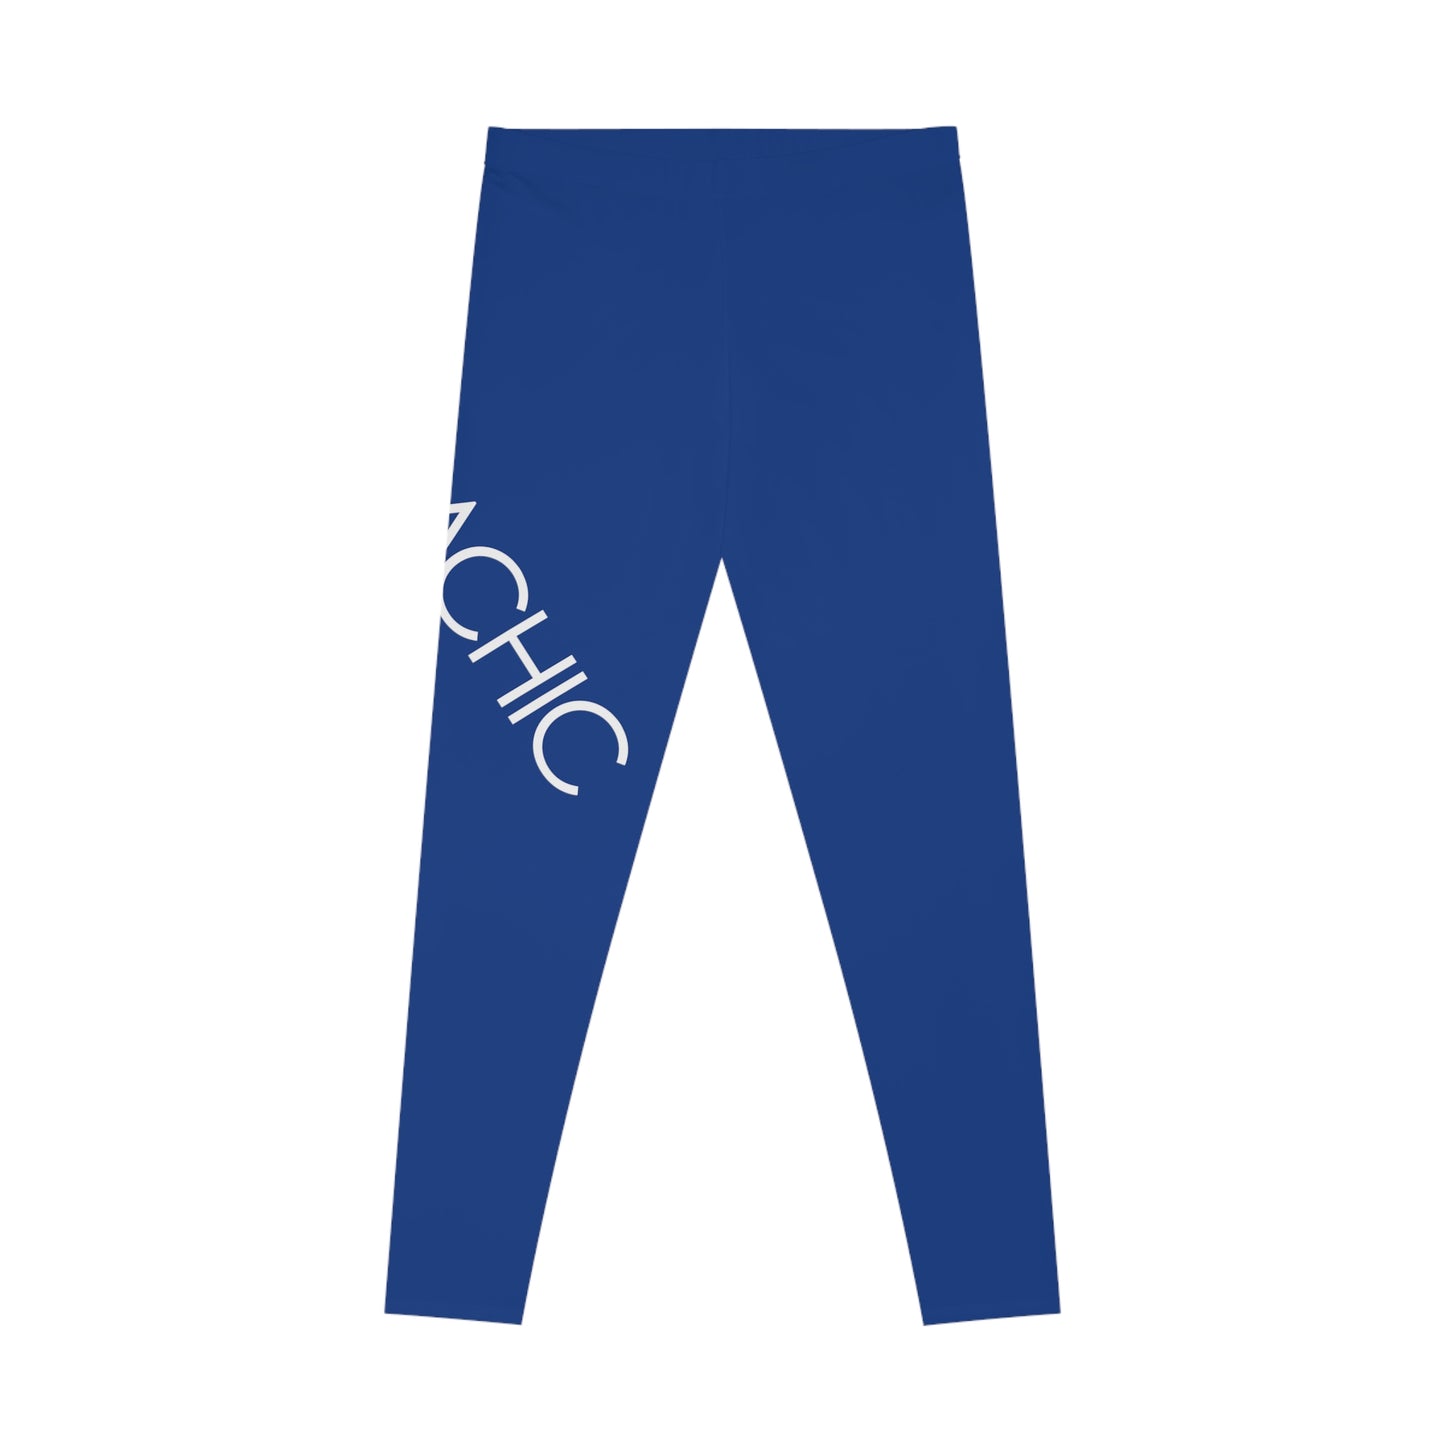 AlphaChic Leggings - Blue (Leg Logo)